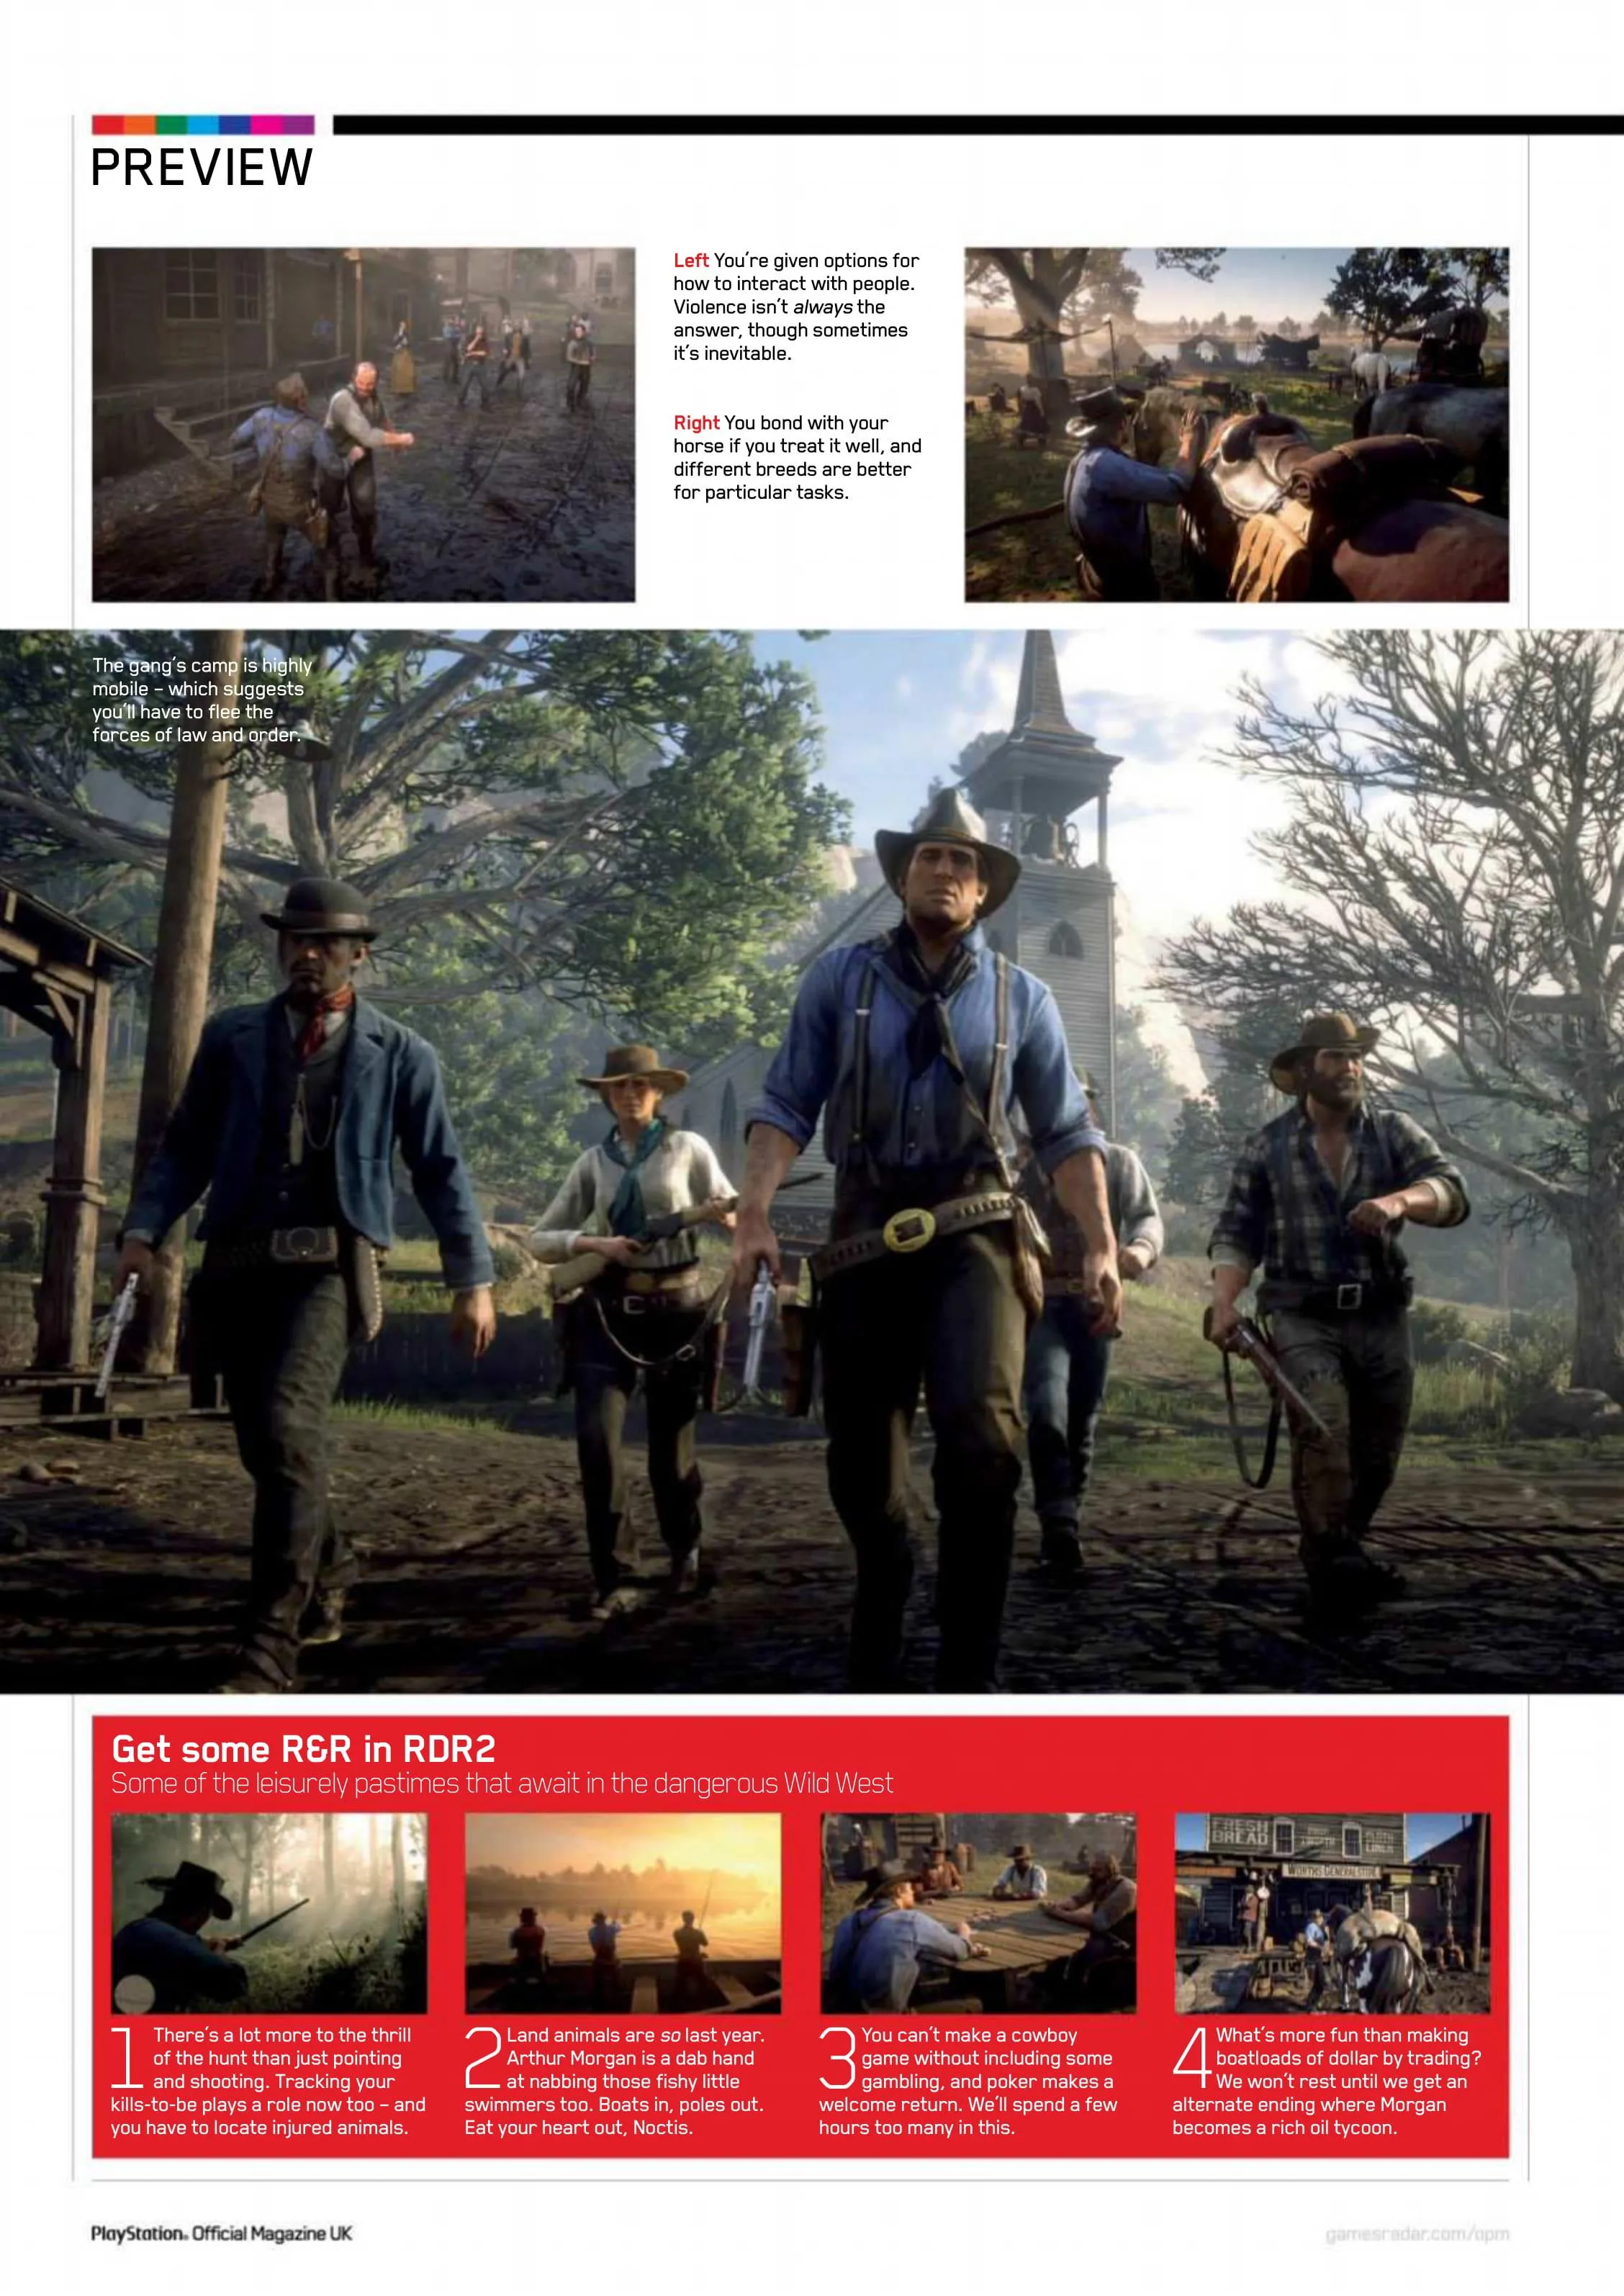 PlayStation Official Magazine UK October 2018 33 1